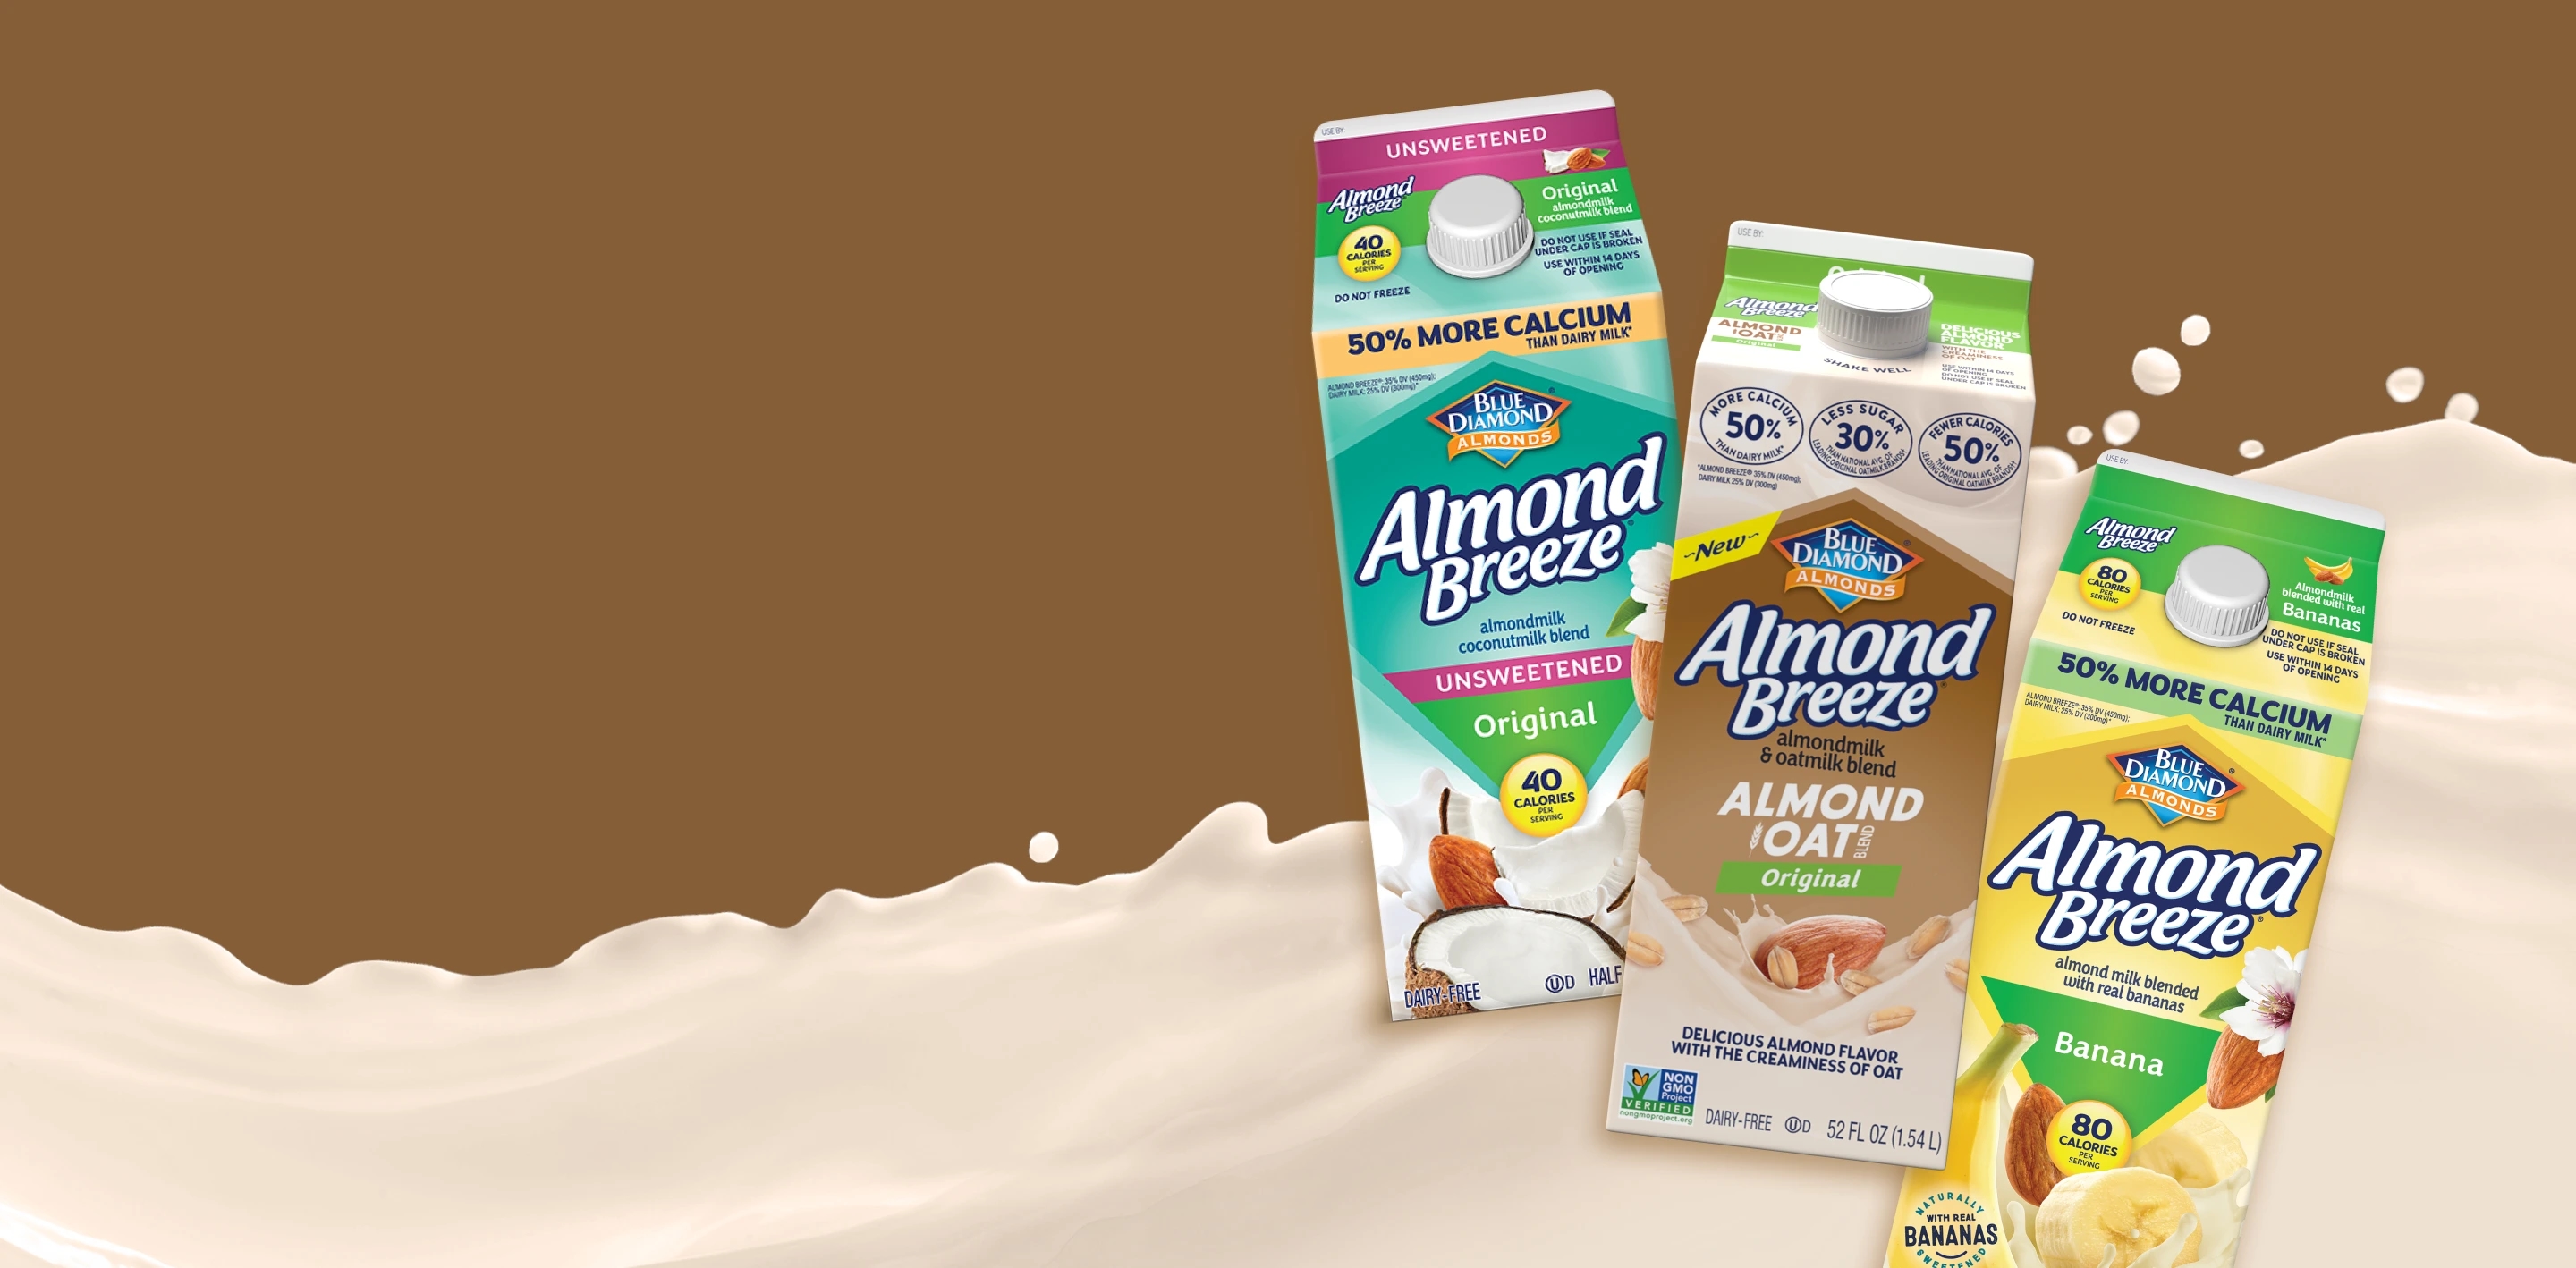 Almond Breeze almondmilk blends